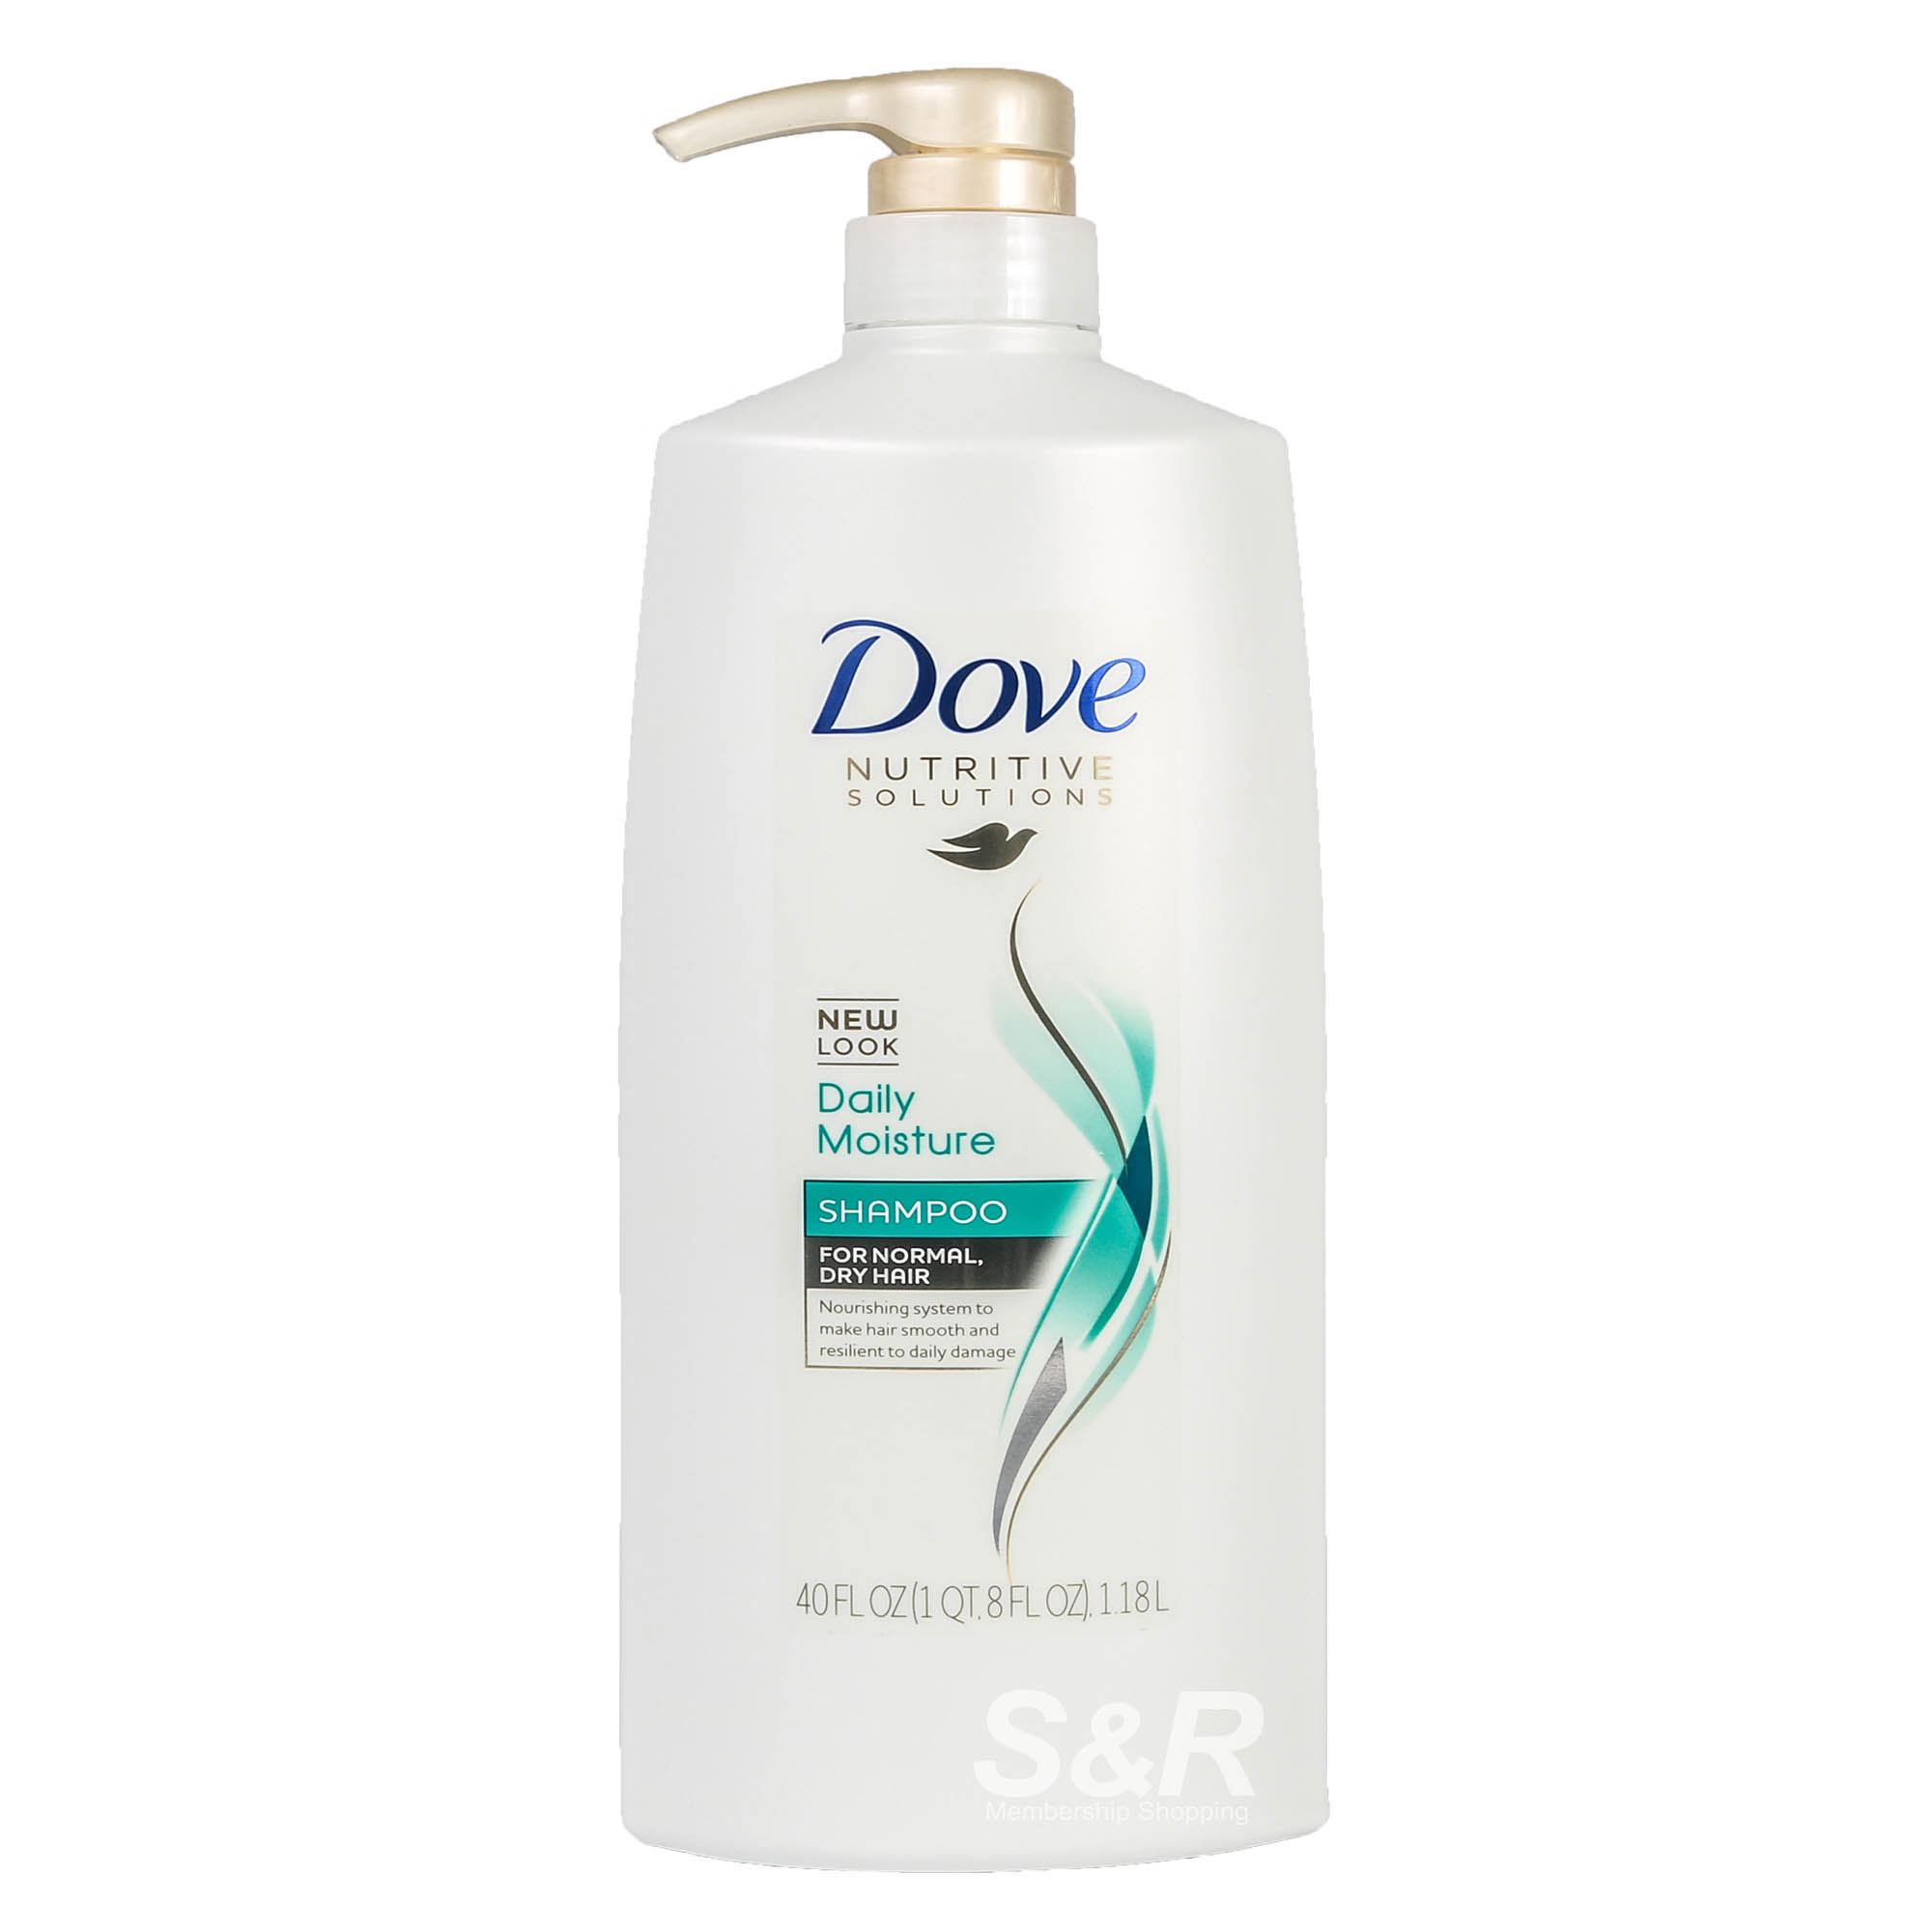 Dove Nutritive Solutions Daily Moisture Shampoo 1.18L